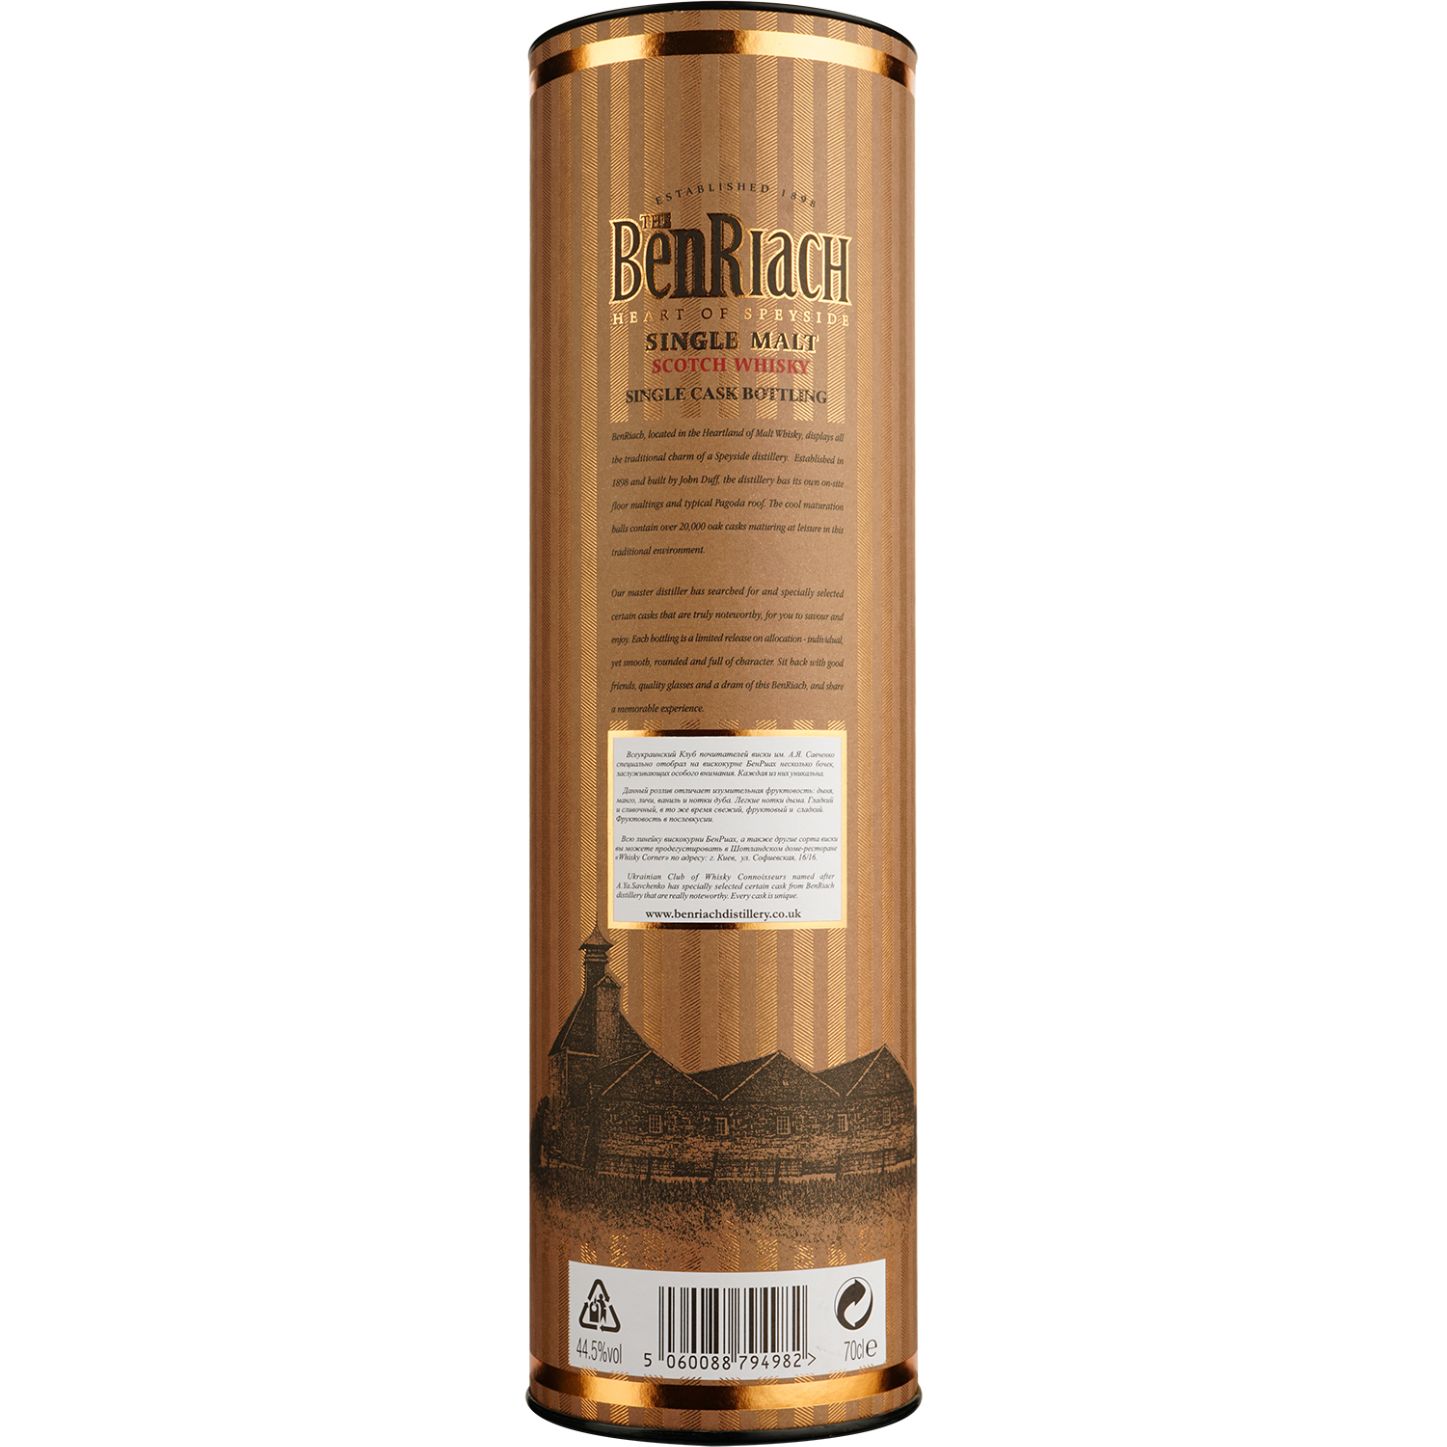 Виски BenRiach 32 Years Old Refill Bourbon Barrel Cask 7512 Single Malt Scotch Whisky, в подарочной упаковке, 44,5%, 0,7 л - фото 6